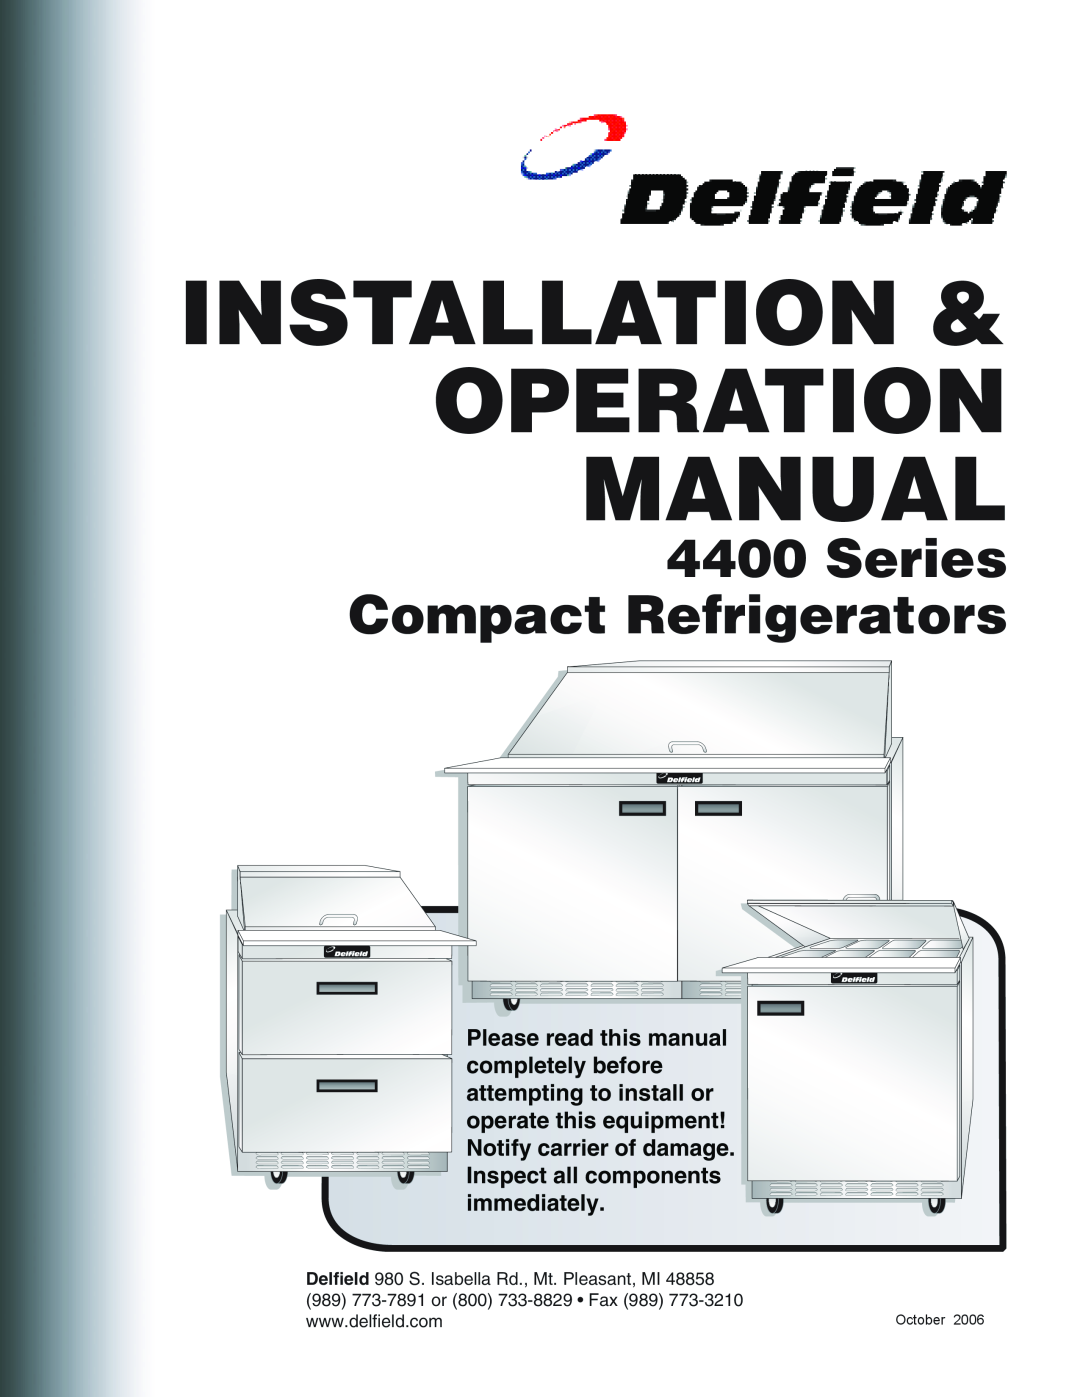 Delfield 4400 series operation manual Series Compact Refrigerators, October 